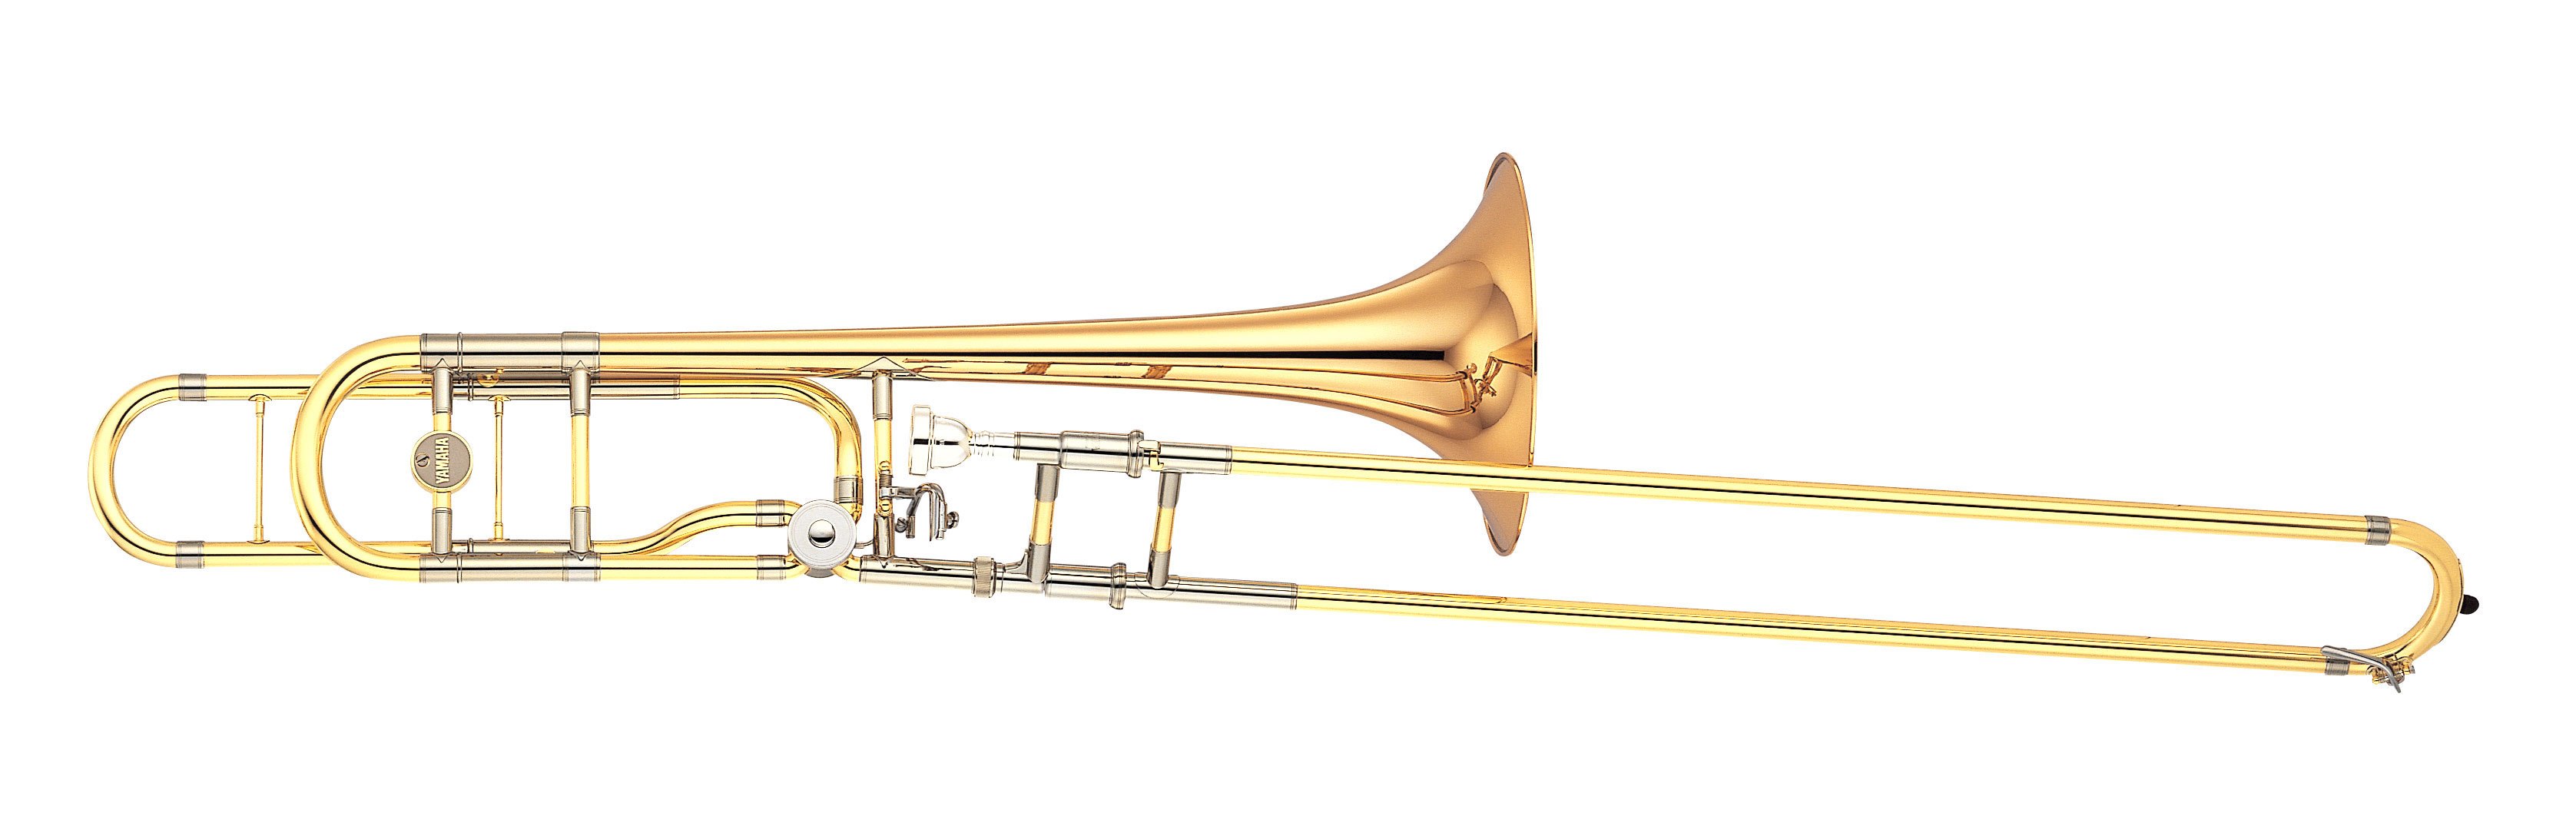 YSL-882O - Overview - Trombones - Brass & Woodwinds - Musical 